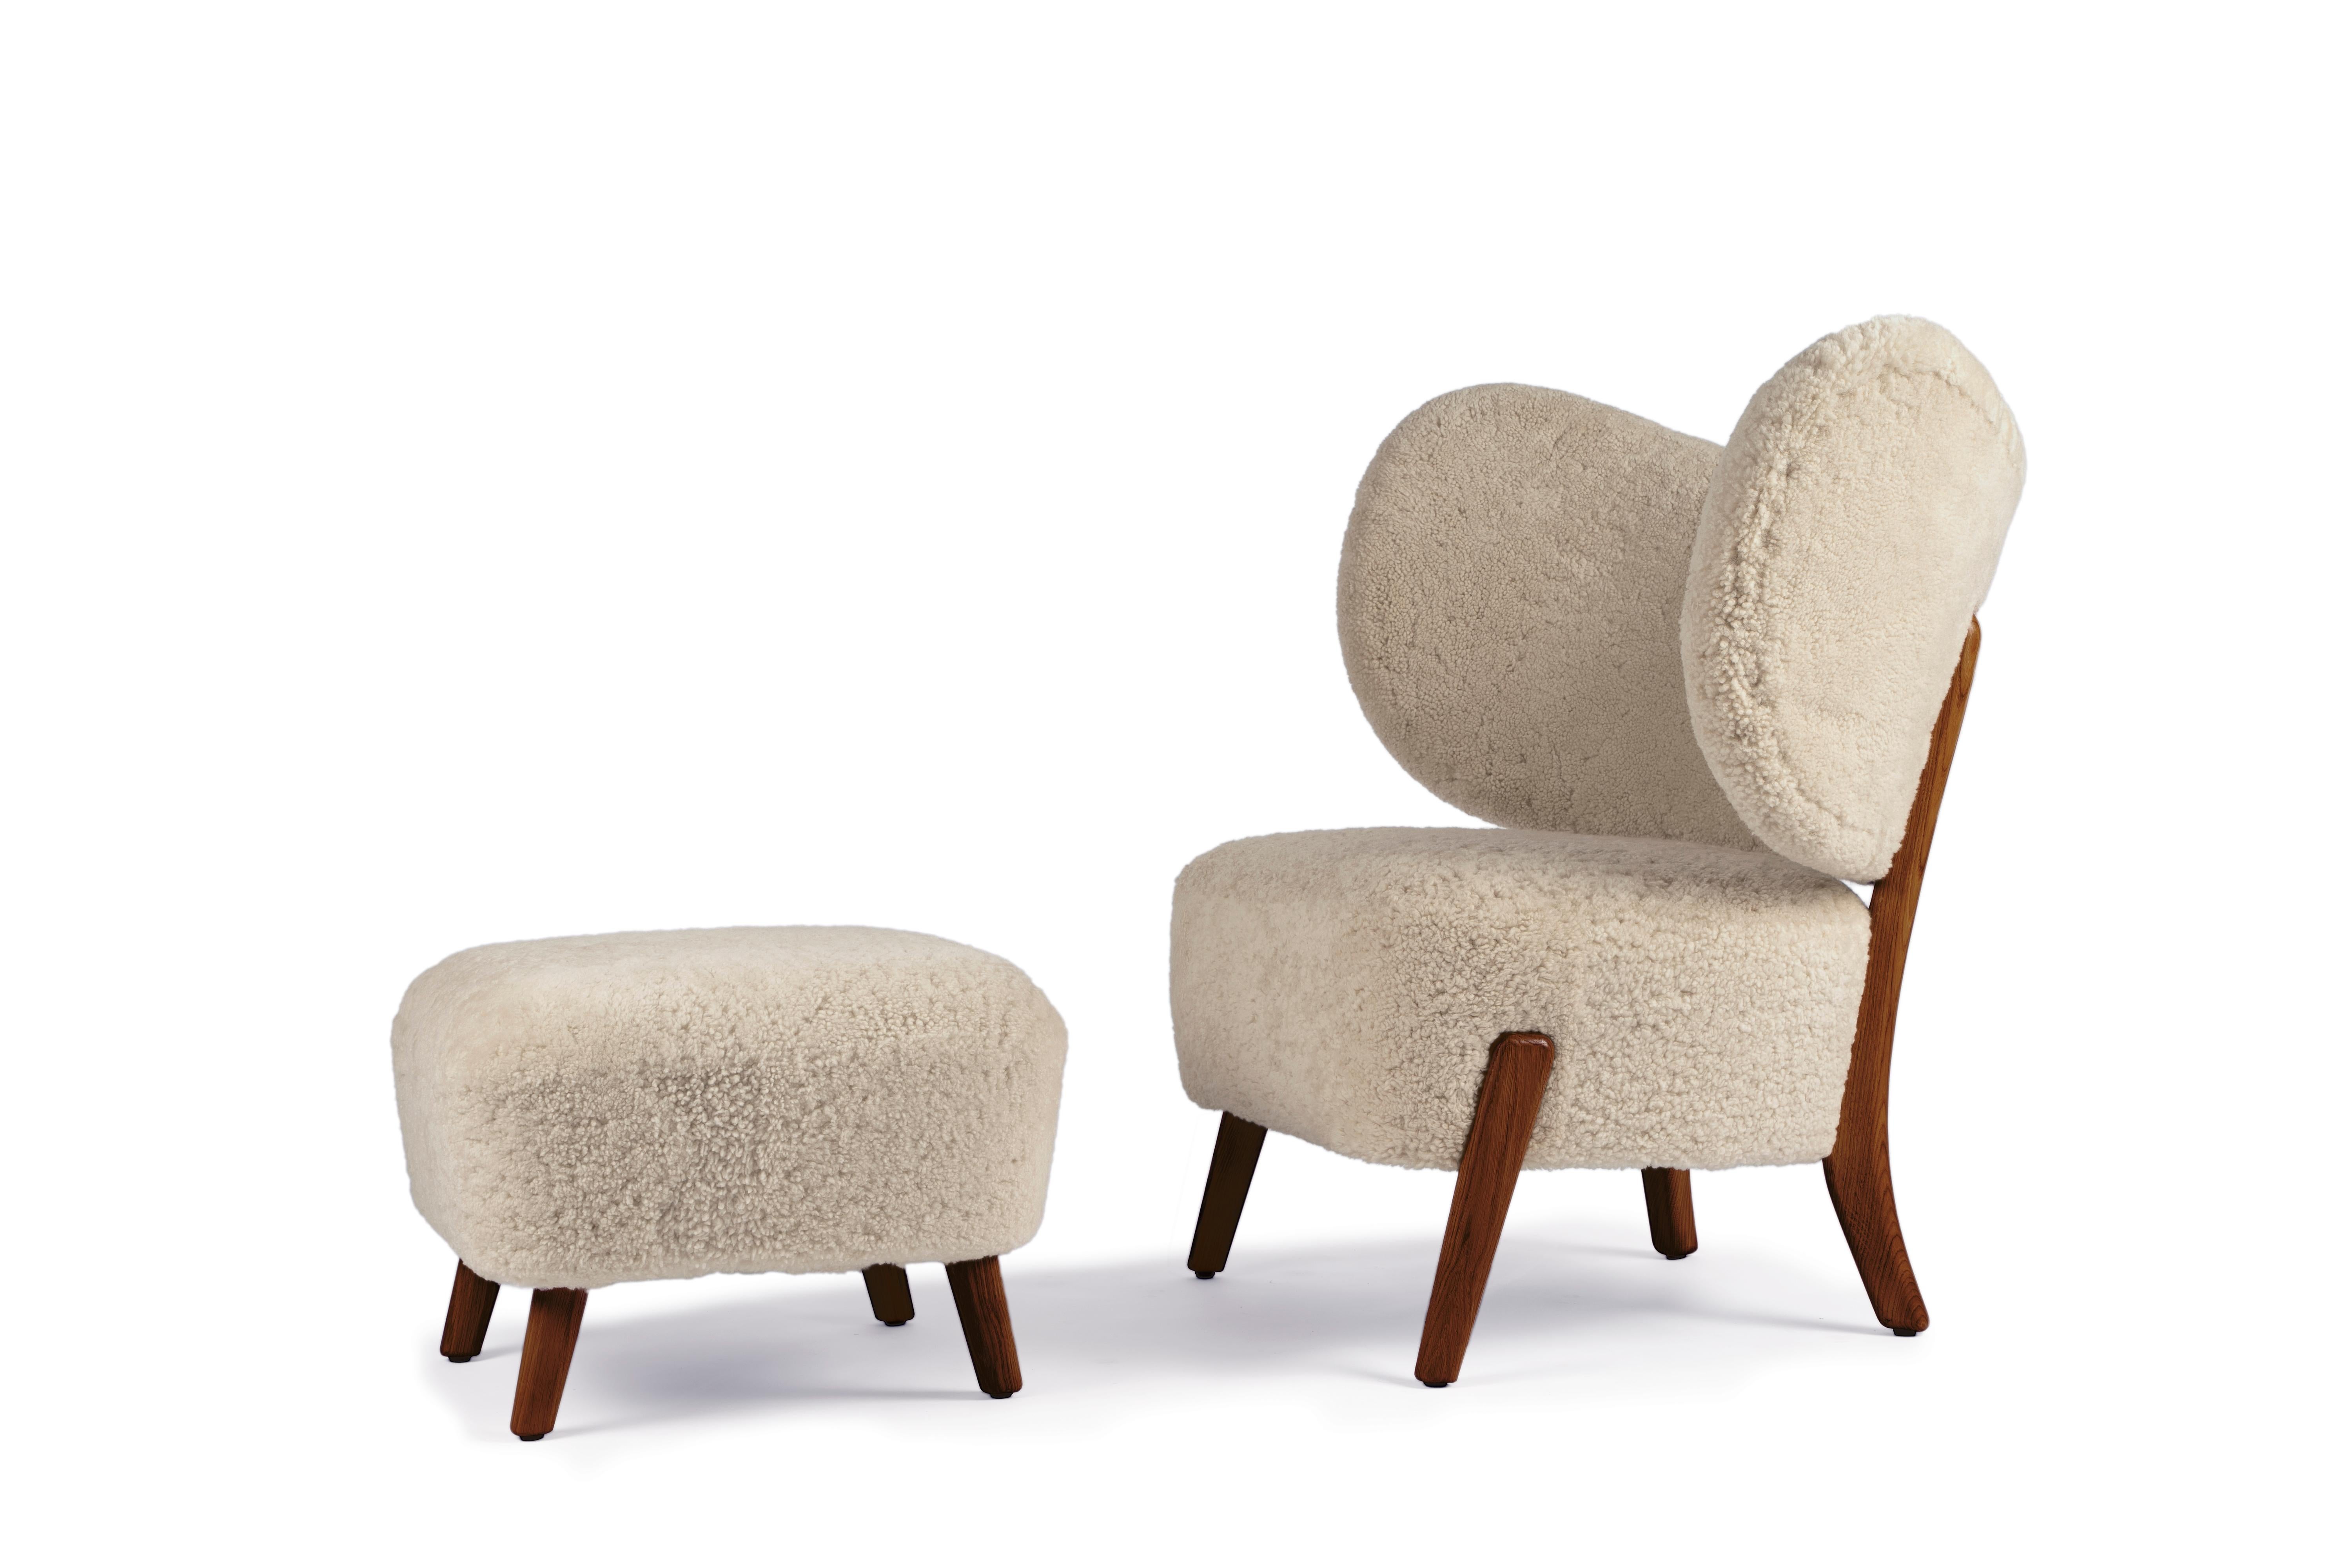 Moonlight Sheepskin set of TMBO lounge chair & Pouff by Mazo Design
Dimensions: W 90 x D 68.5 x H 87 cm / W 49 x D 49 x H 34 cm
Materials: Oak, Sheepskin
Also Available: ROMO/Linara, DAW/Royal, KVADRAT/Remix, KVADRAT/Hallingdal & Fiord,